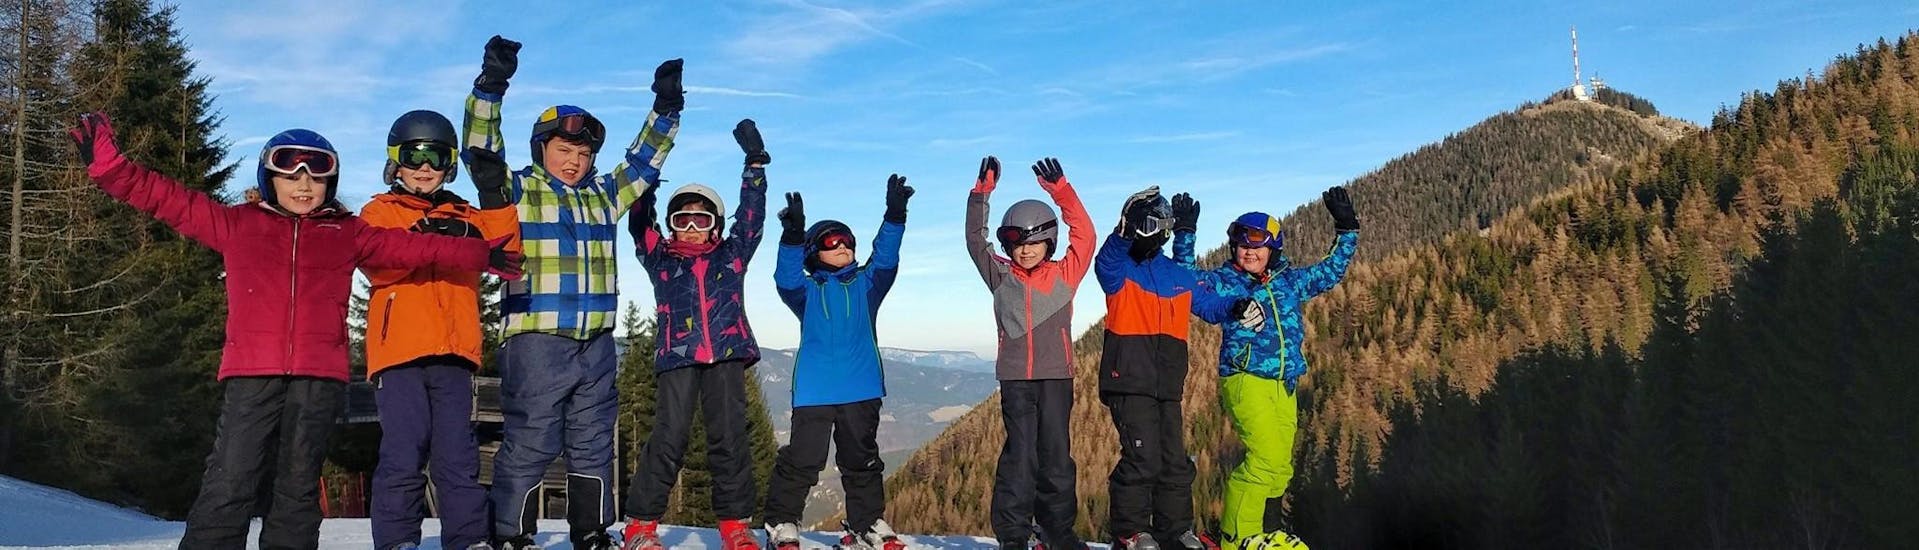 kids-ski-lessons-schneesportschule-zauberberg-hero